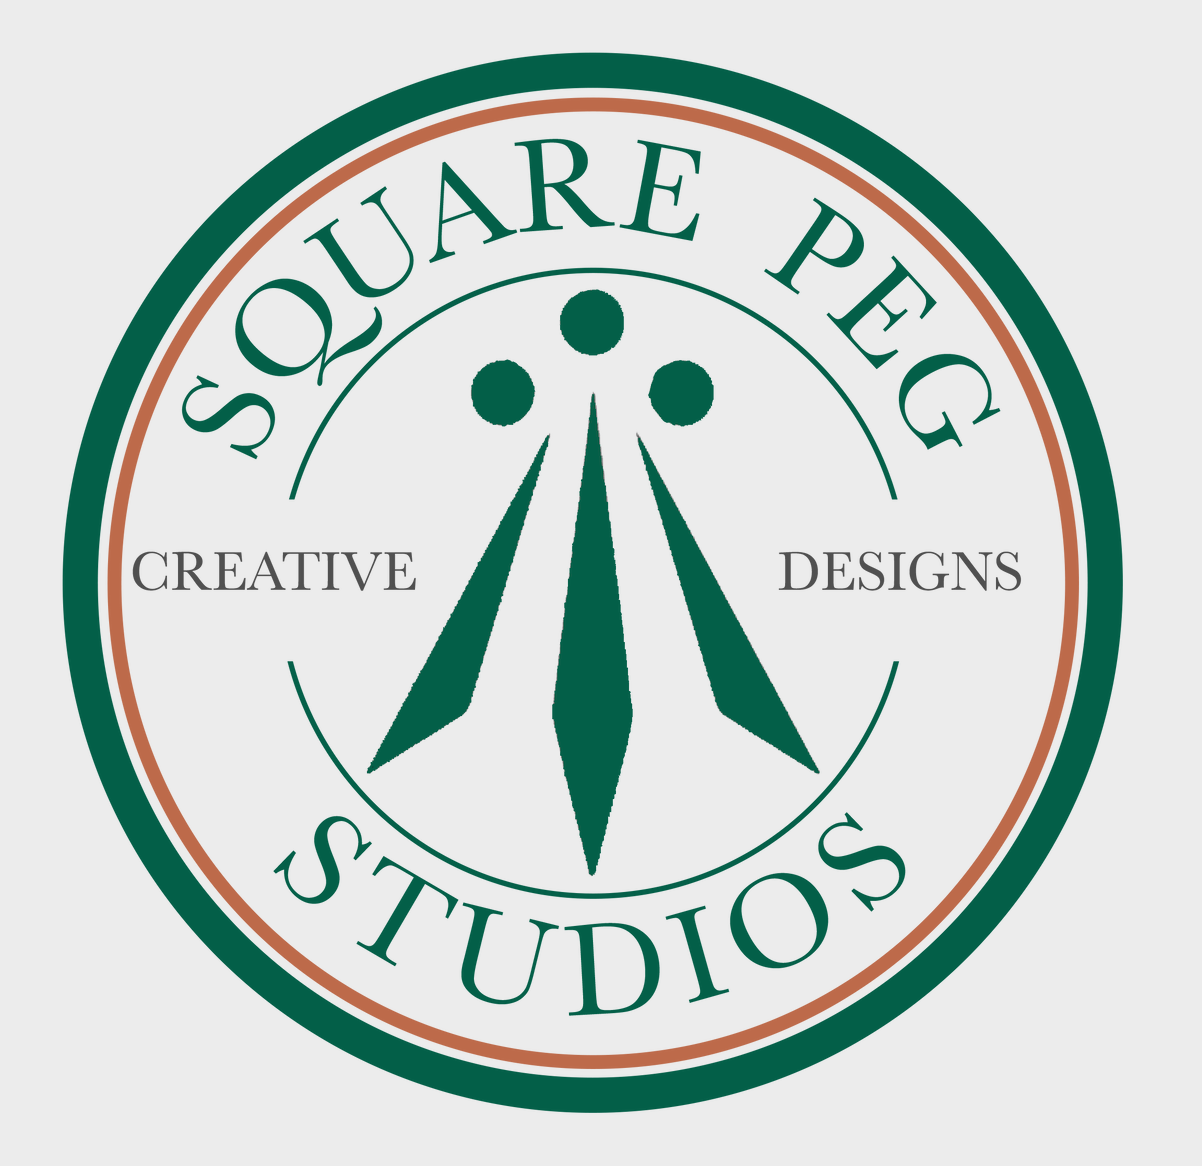 Square Peg Studios